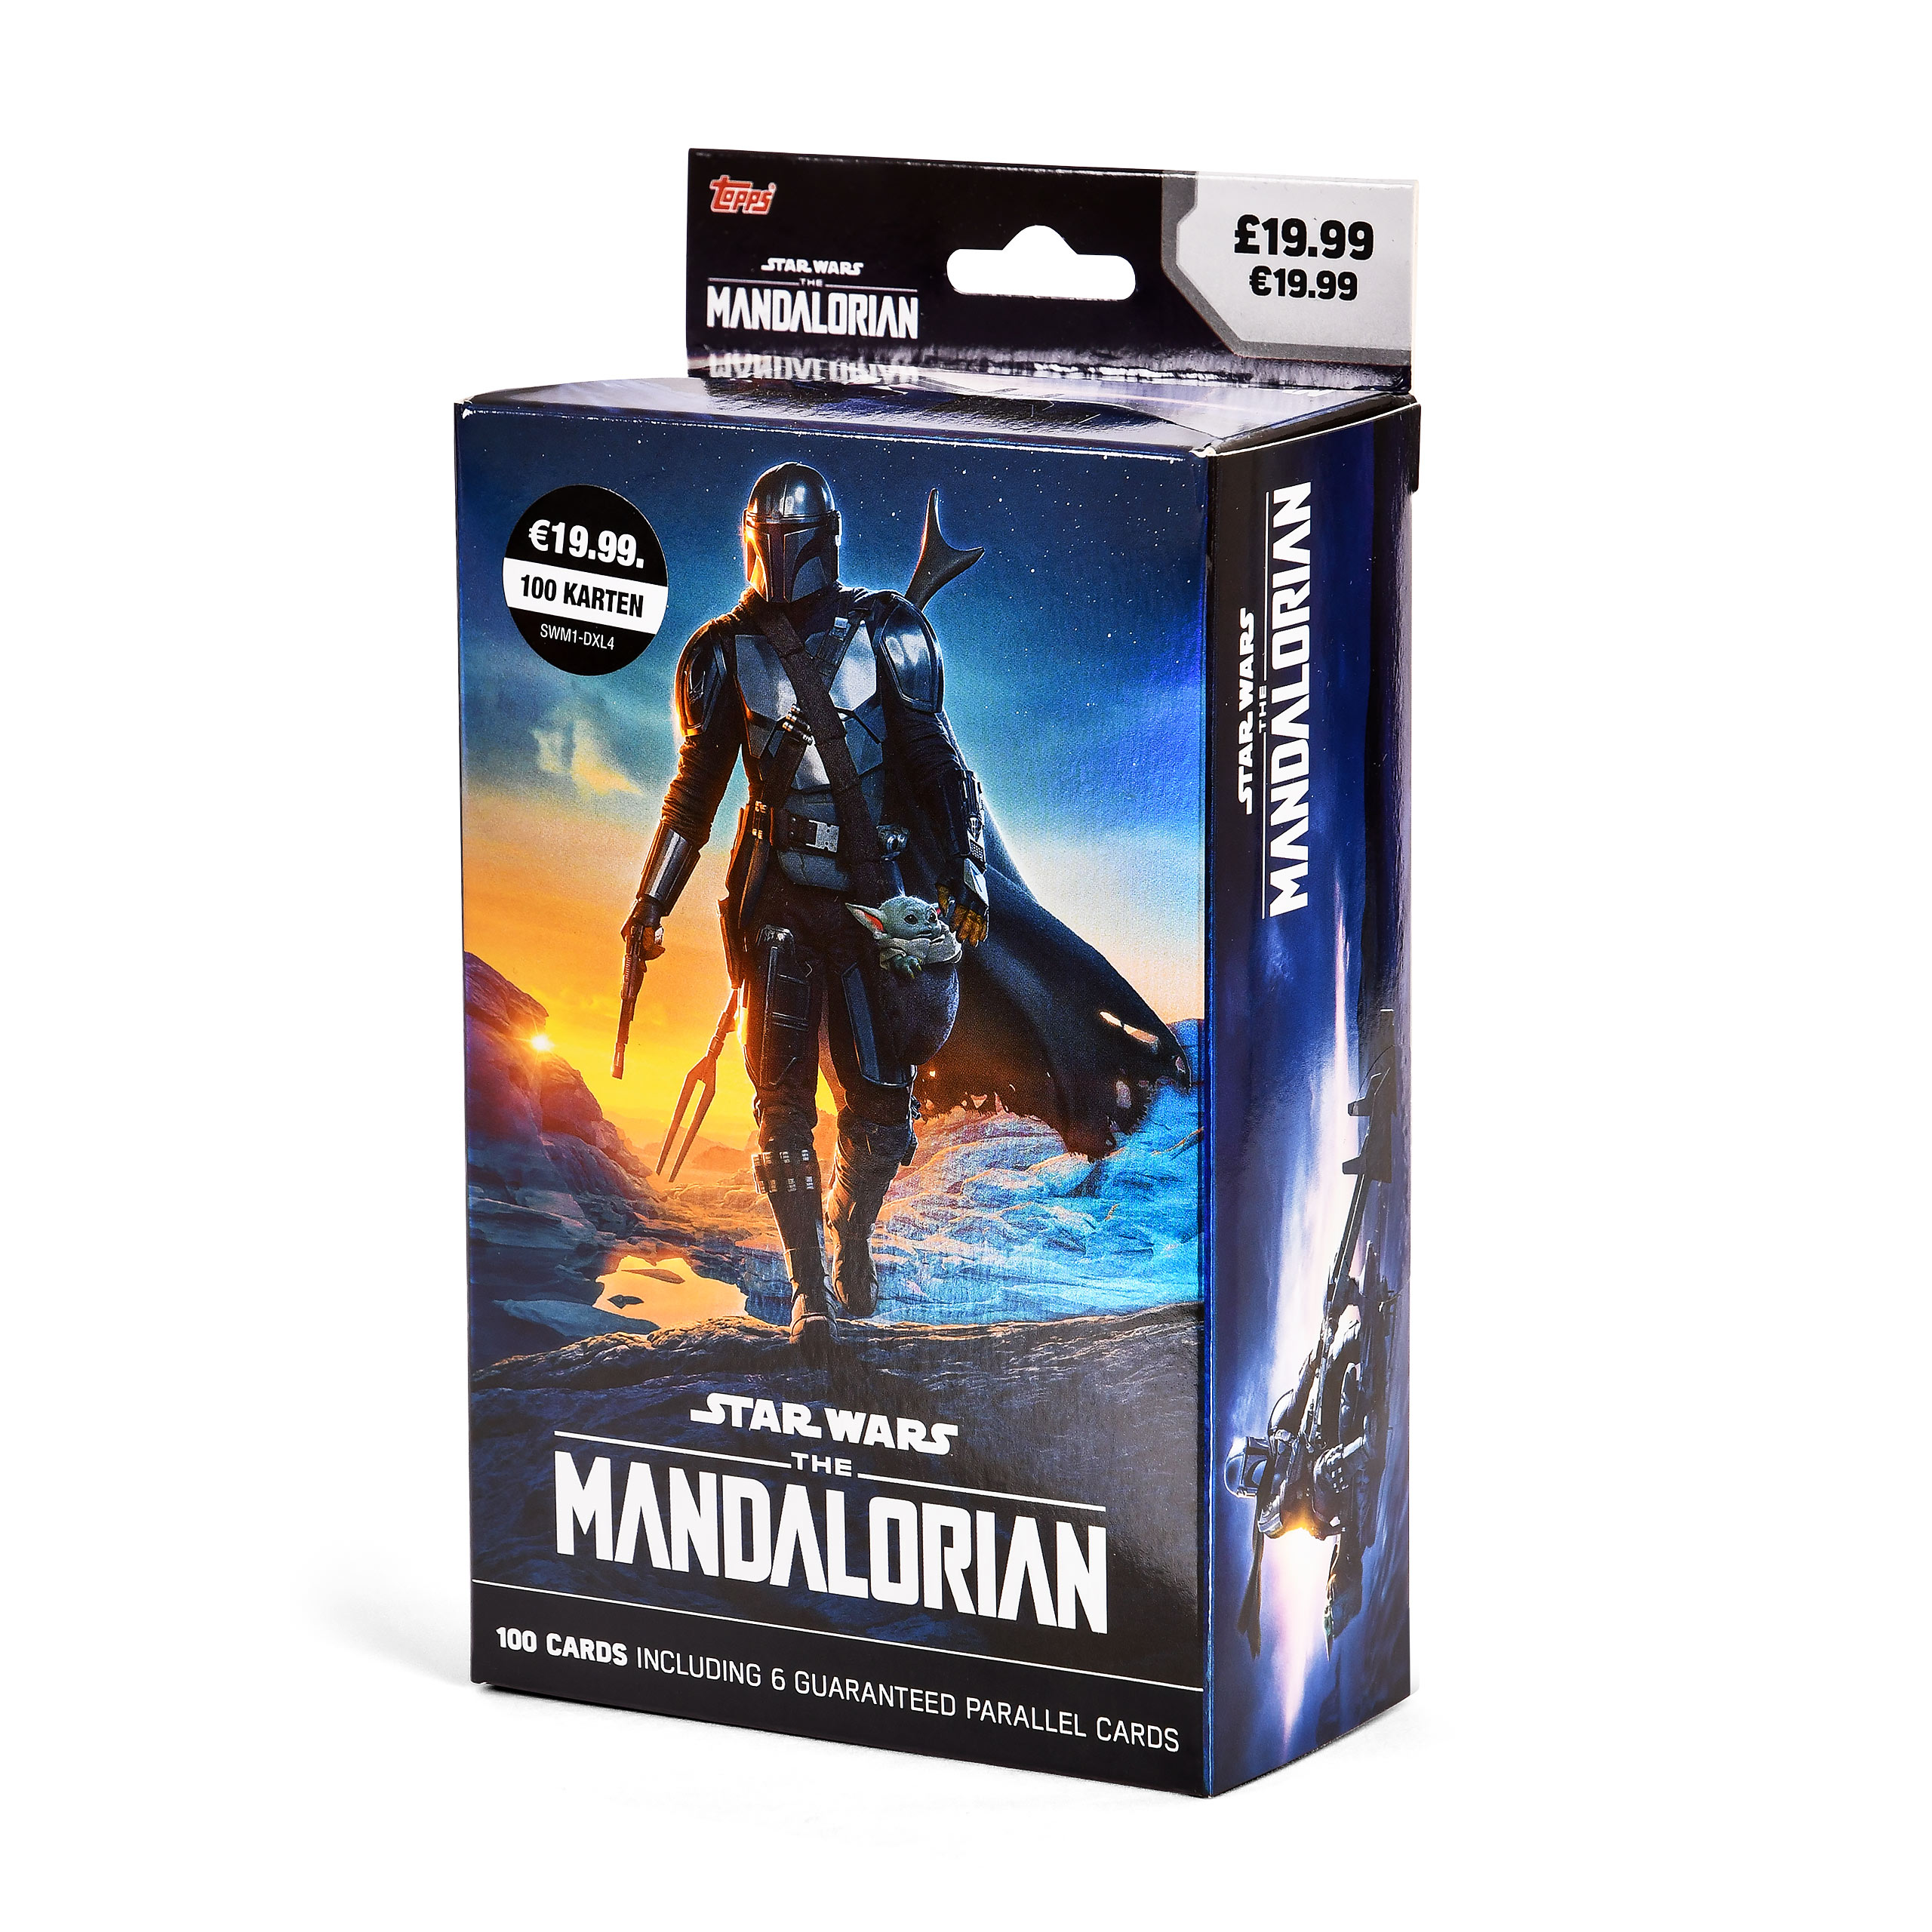 The Mandalorian Trading Card Premium Box - Star Wars